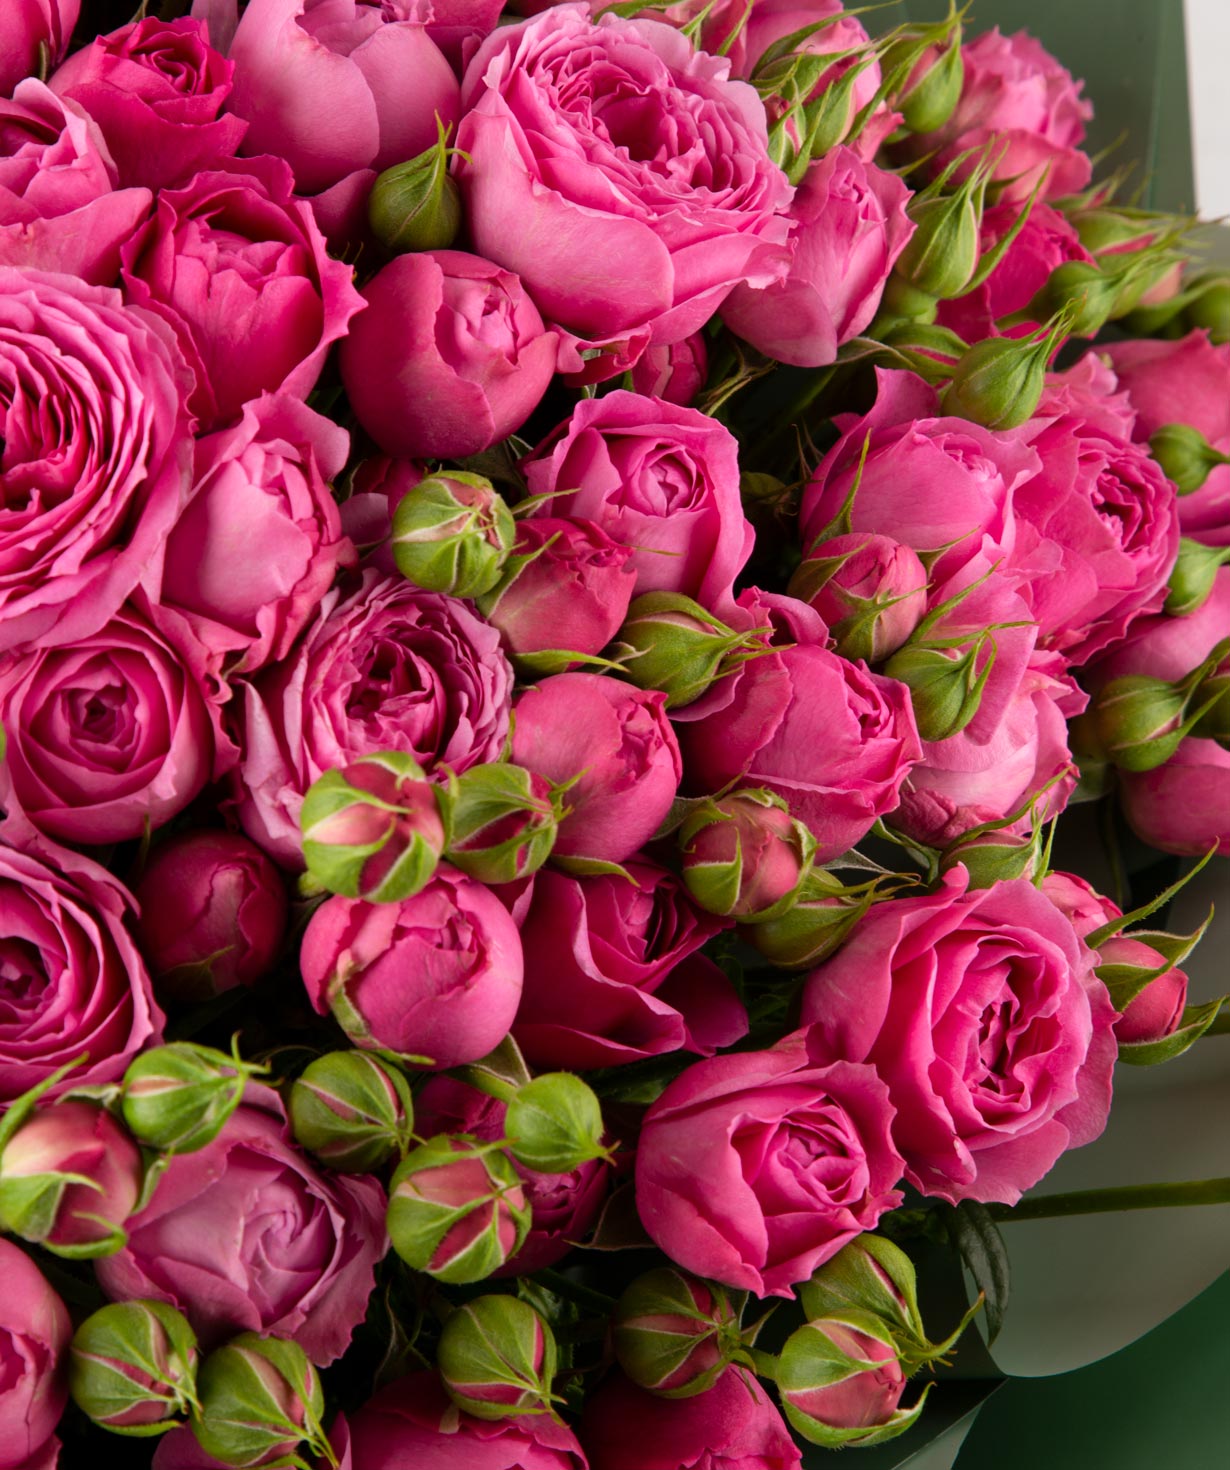 Bouquet ''Orenburg'' with spray roses